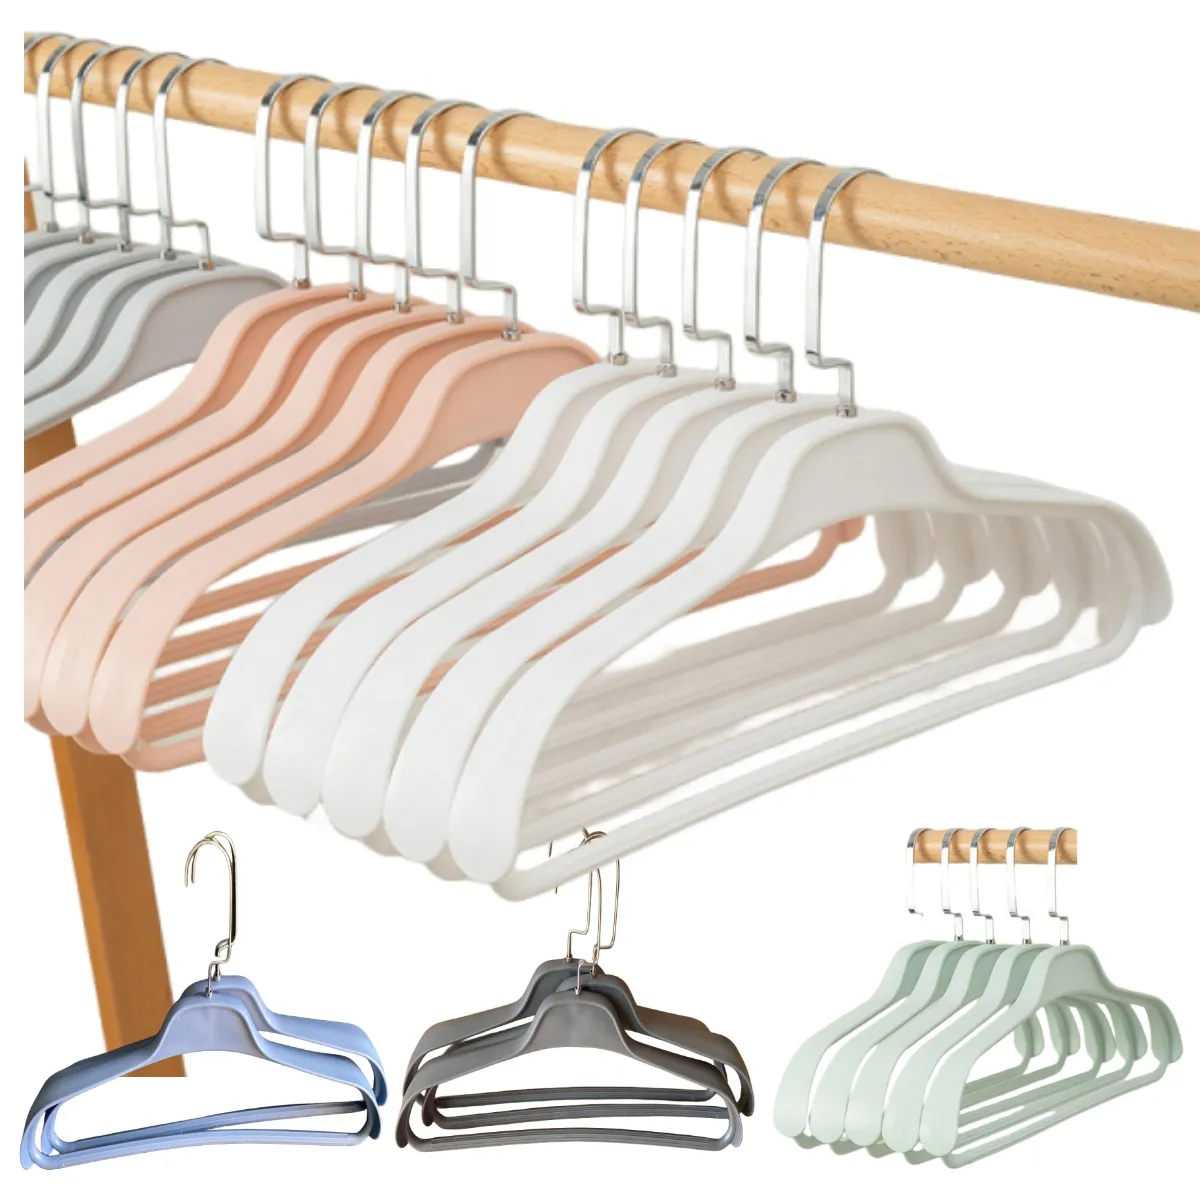 Adult Clothes Hanger Racks Plastic Display Hangers Wide Shoulder Clothing Hanging Student Coats Hanger Organizer